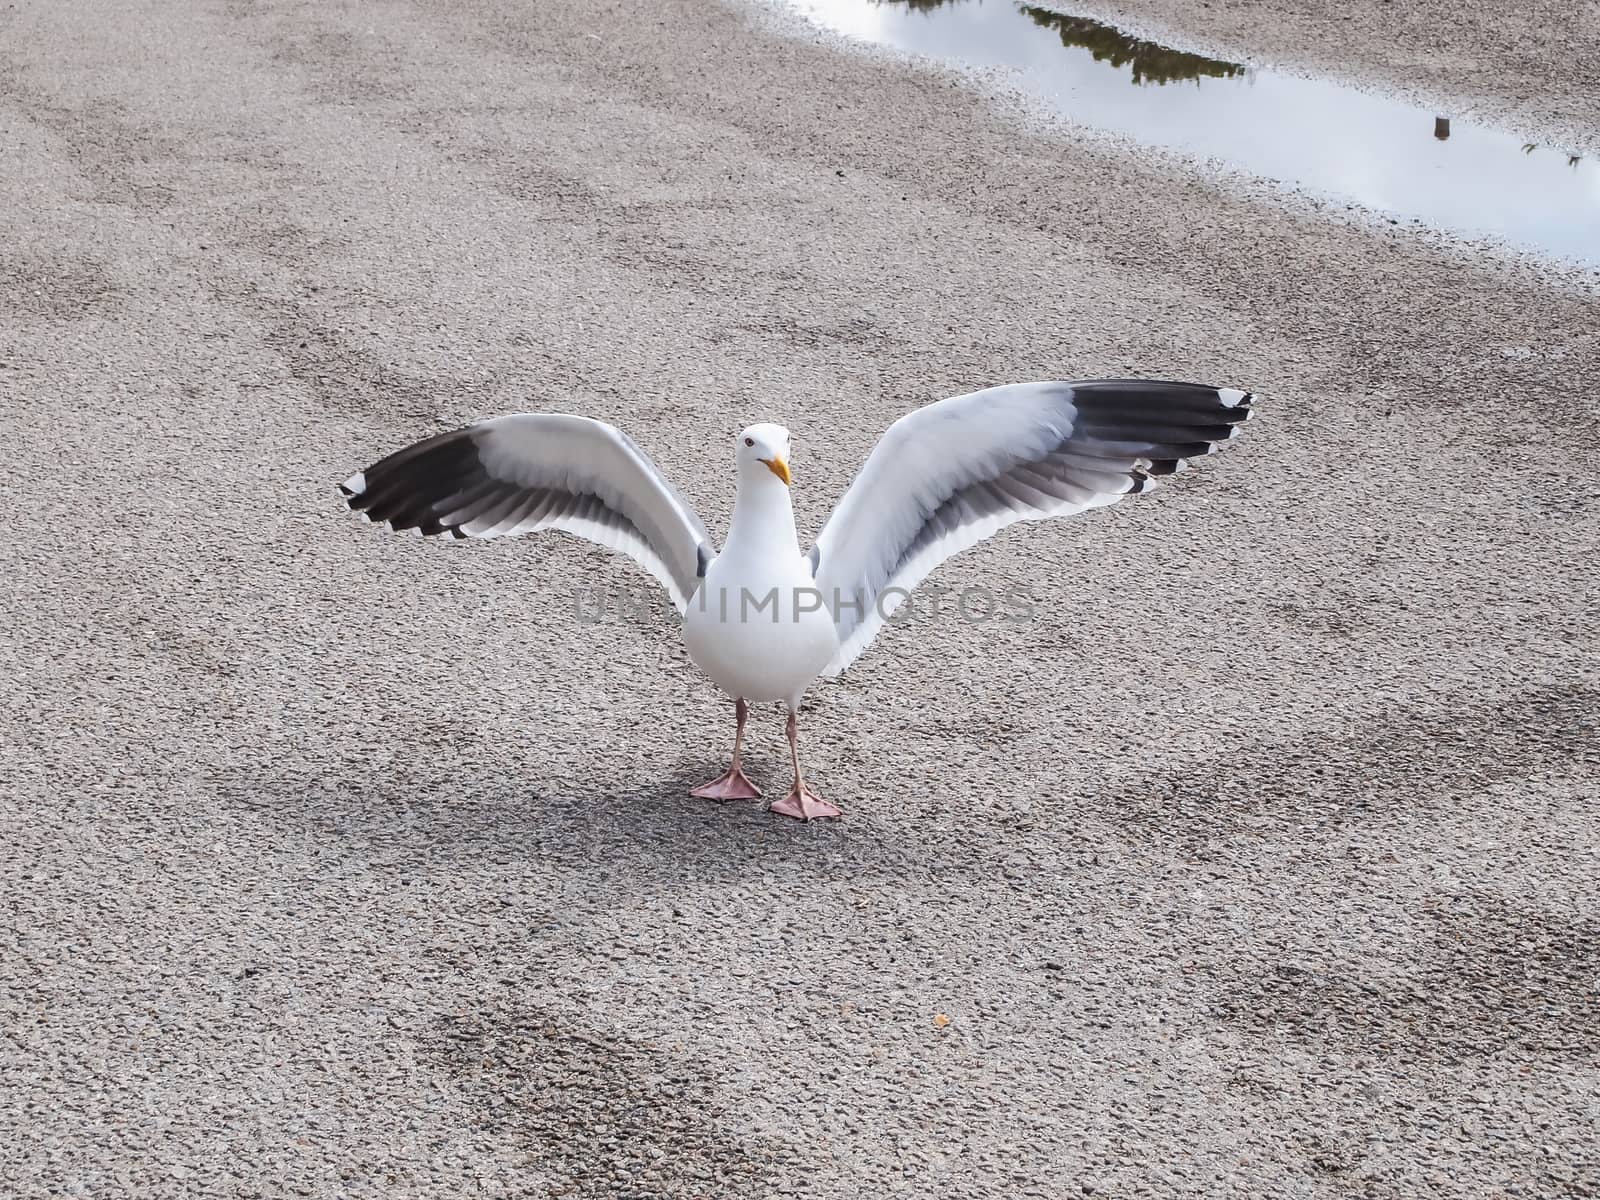 white bird seagull posing on a street, Morro Rock Bay, California USA